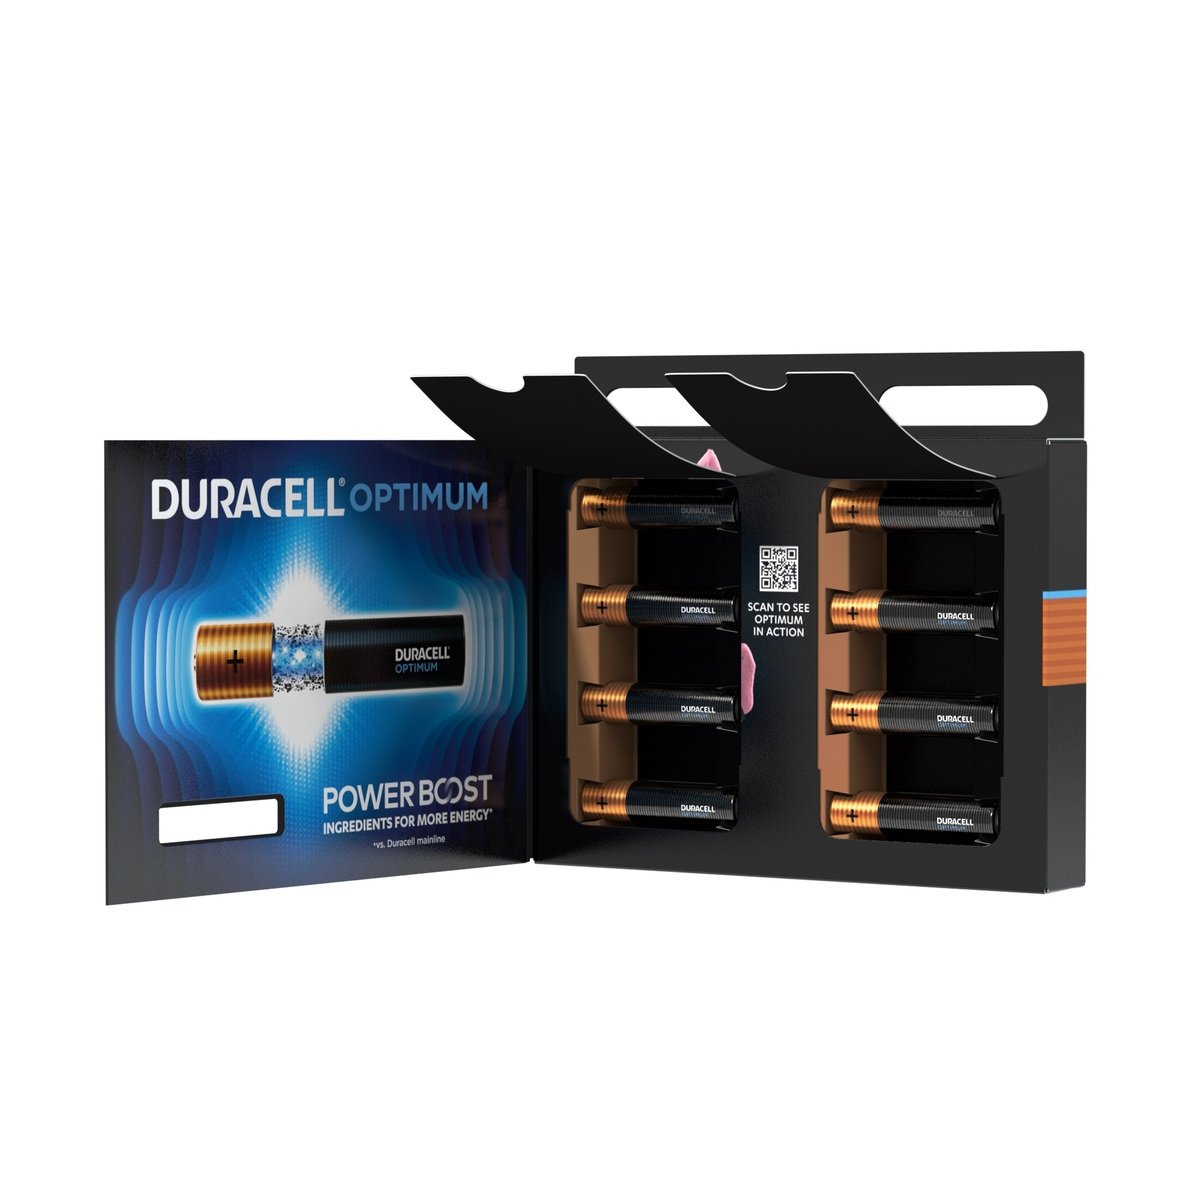 Duracell Optimum Type AAA Alkaline Batteries, pack of 8